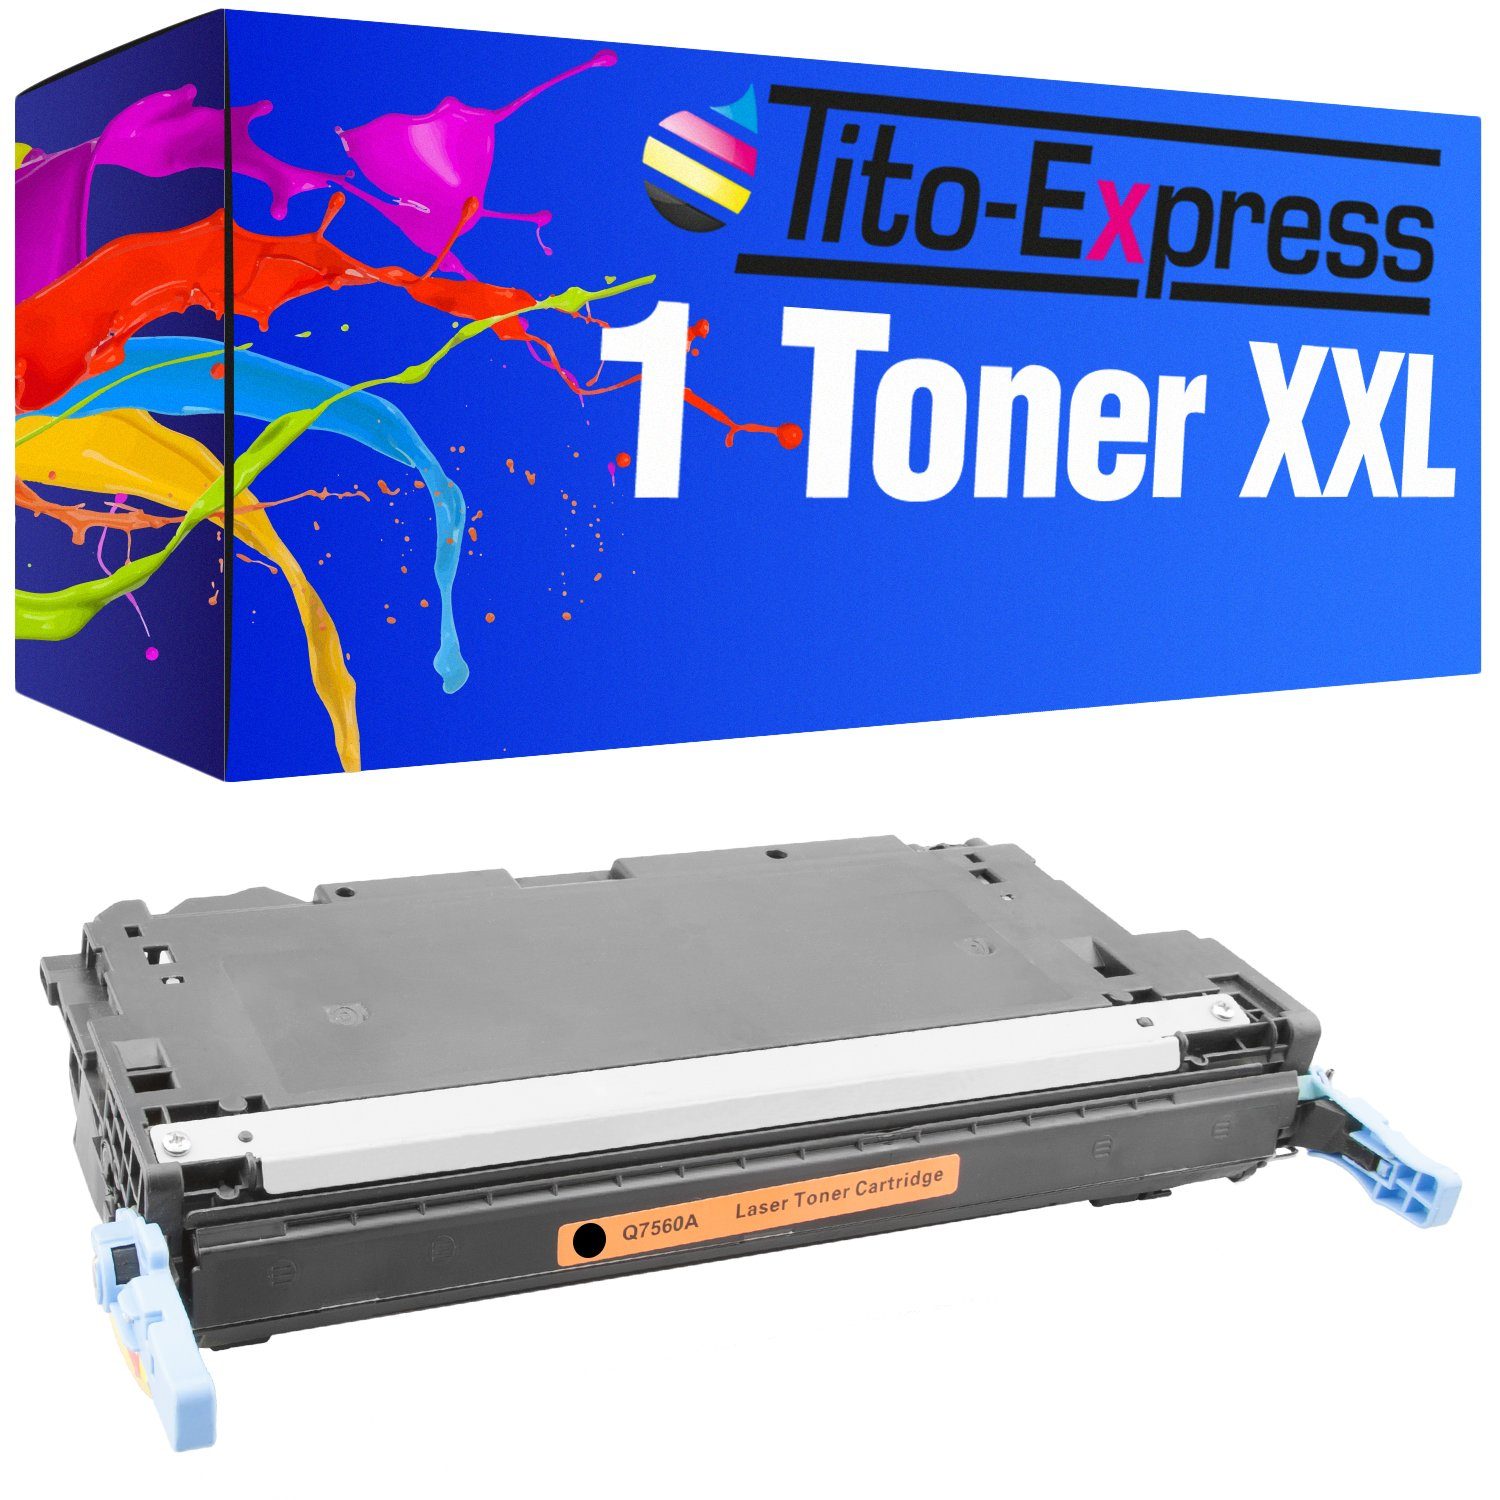 Tito-Express Tonerpatrone ersetzt HP Q 7560 A HP Q 7560A HPQ7560A Black, für Color LaserJet 2700 2700N 2700 Series 3000 3000DN 3000DTN 3000N